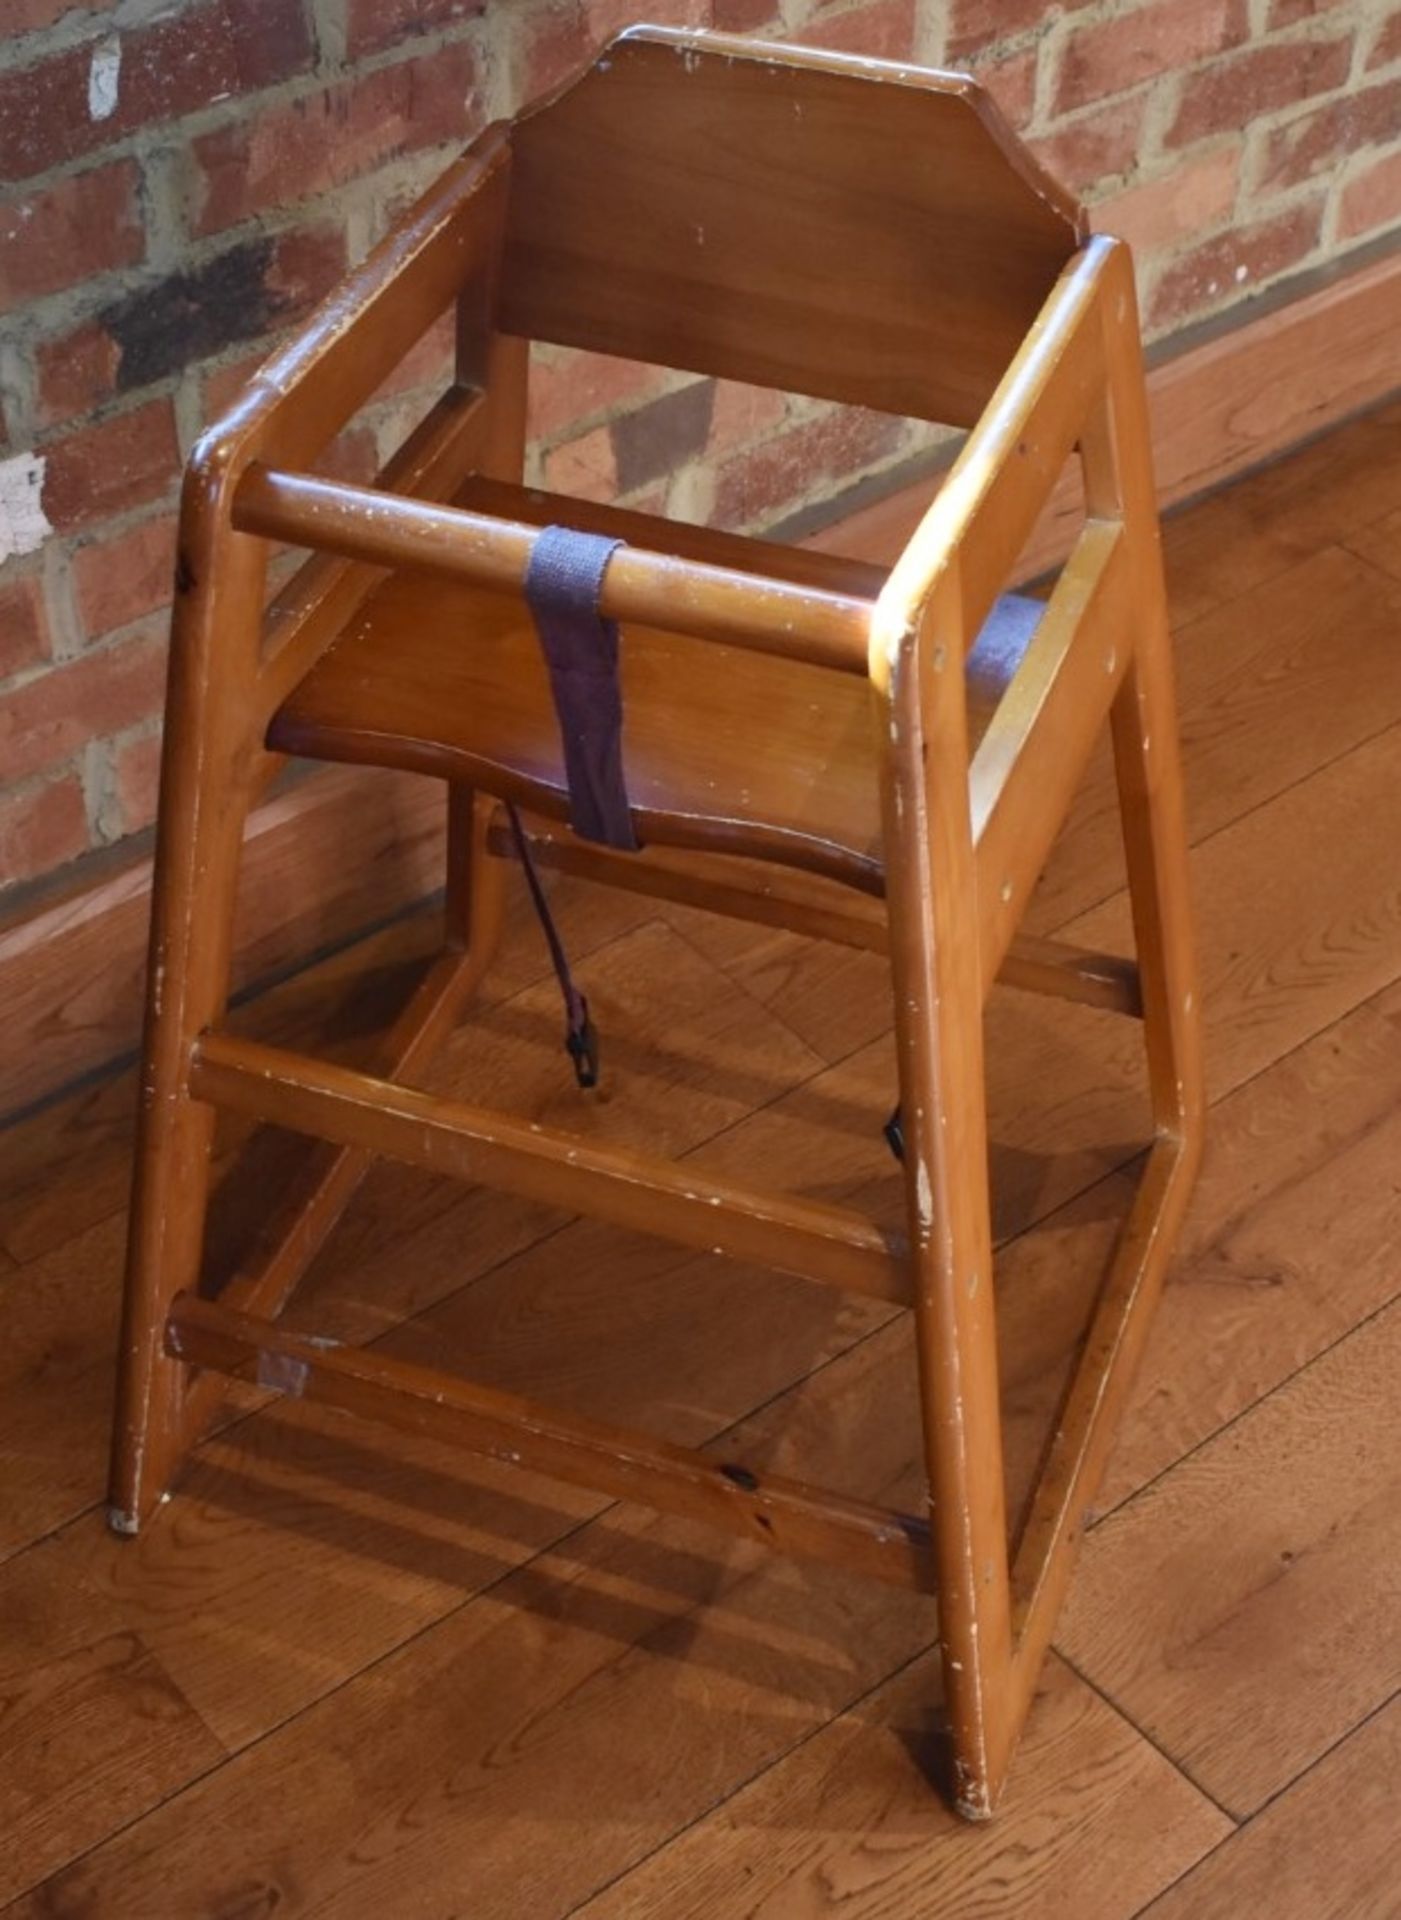 4 x Wooden Restaurant Children's High Chairs - CL499 - Location: London EN1 - Image 4 of 4